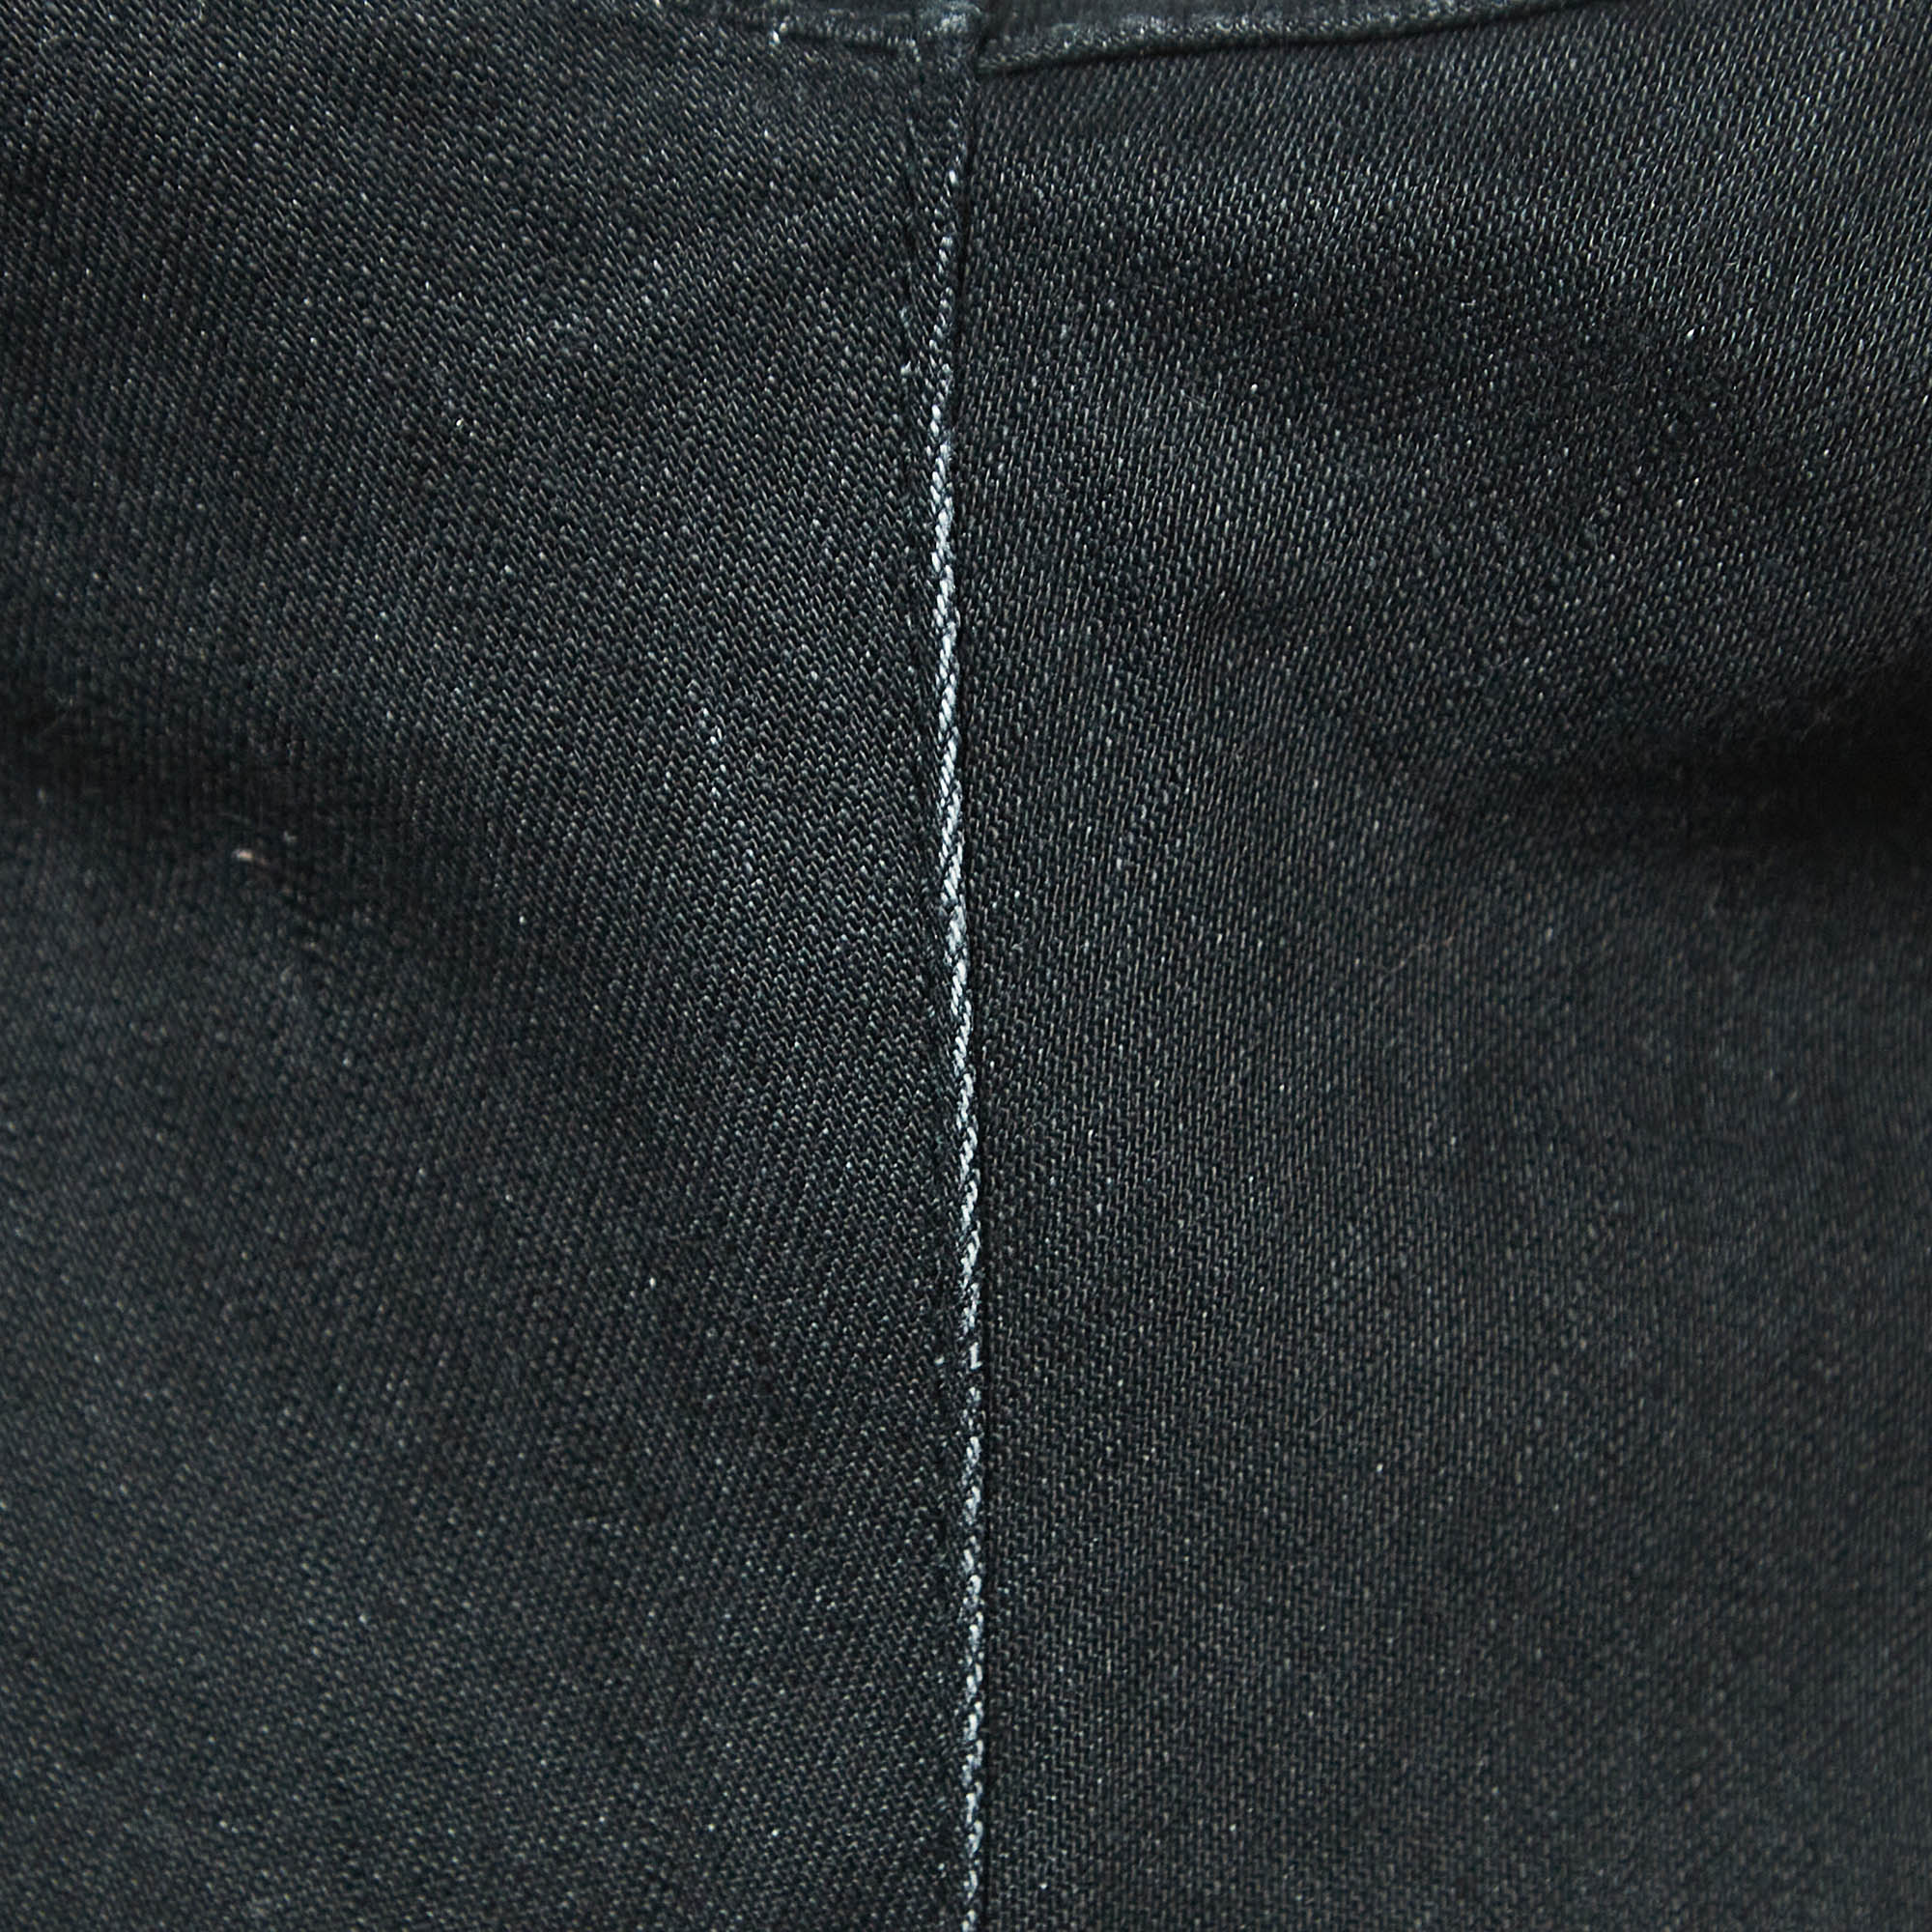 Saint Laurent Paris Black Denim Skinny Jeans M Waist 30